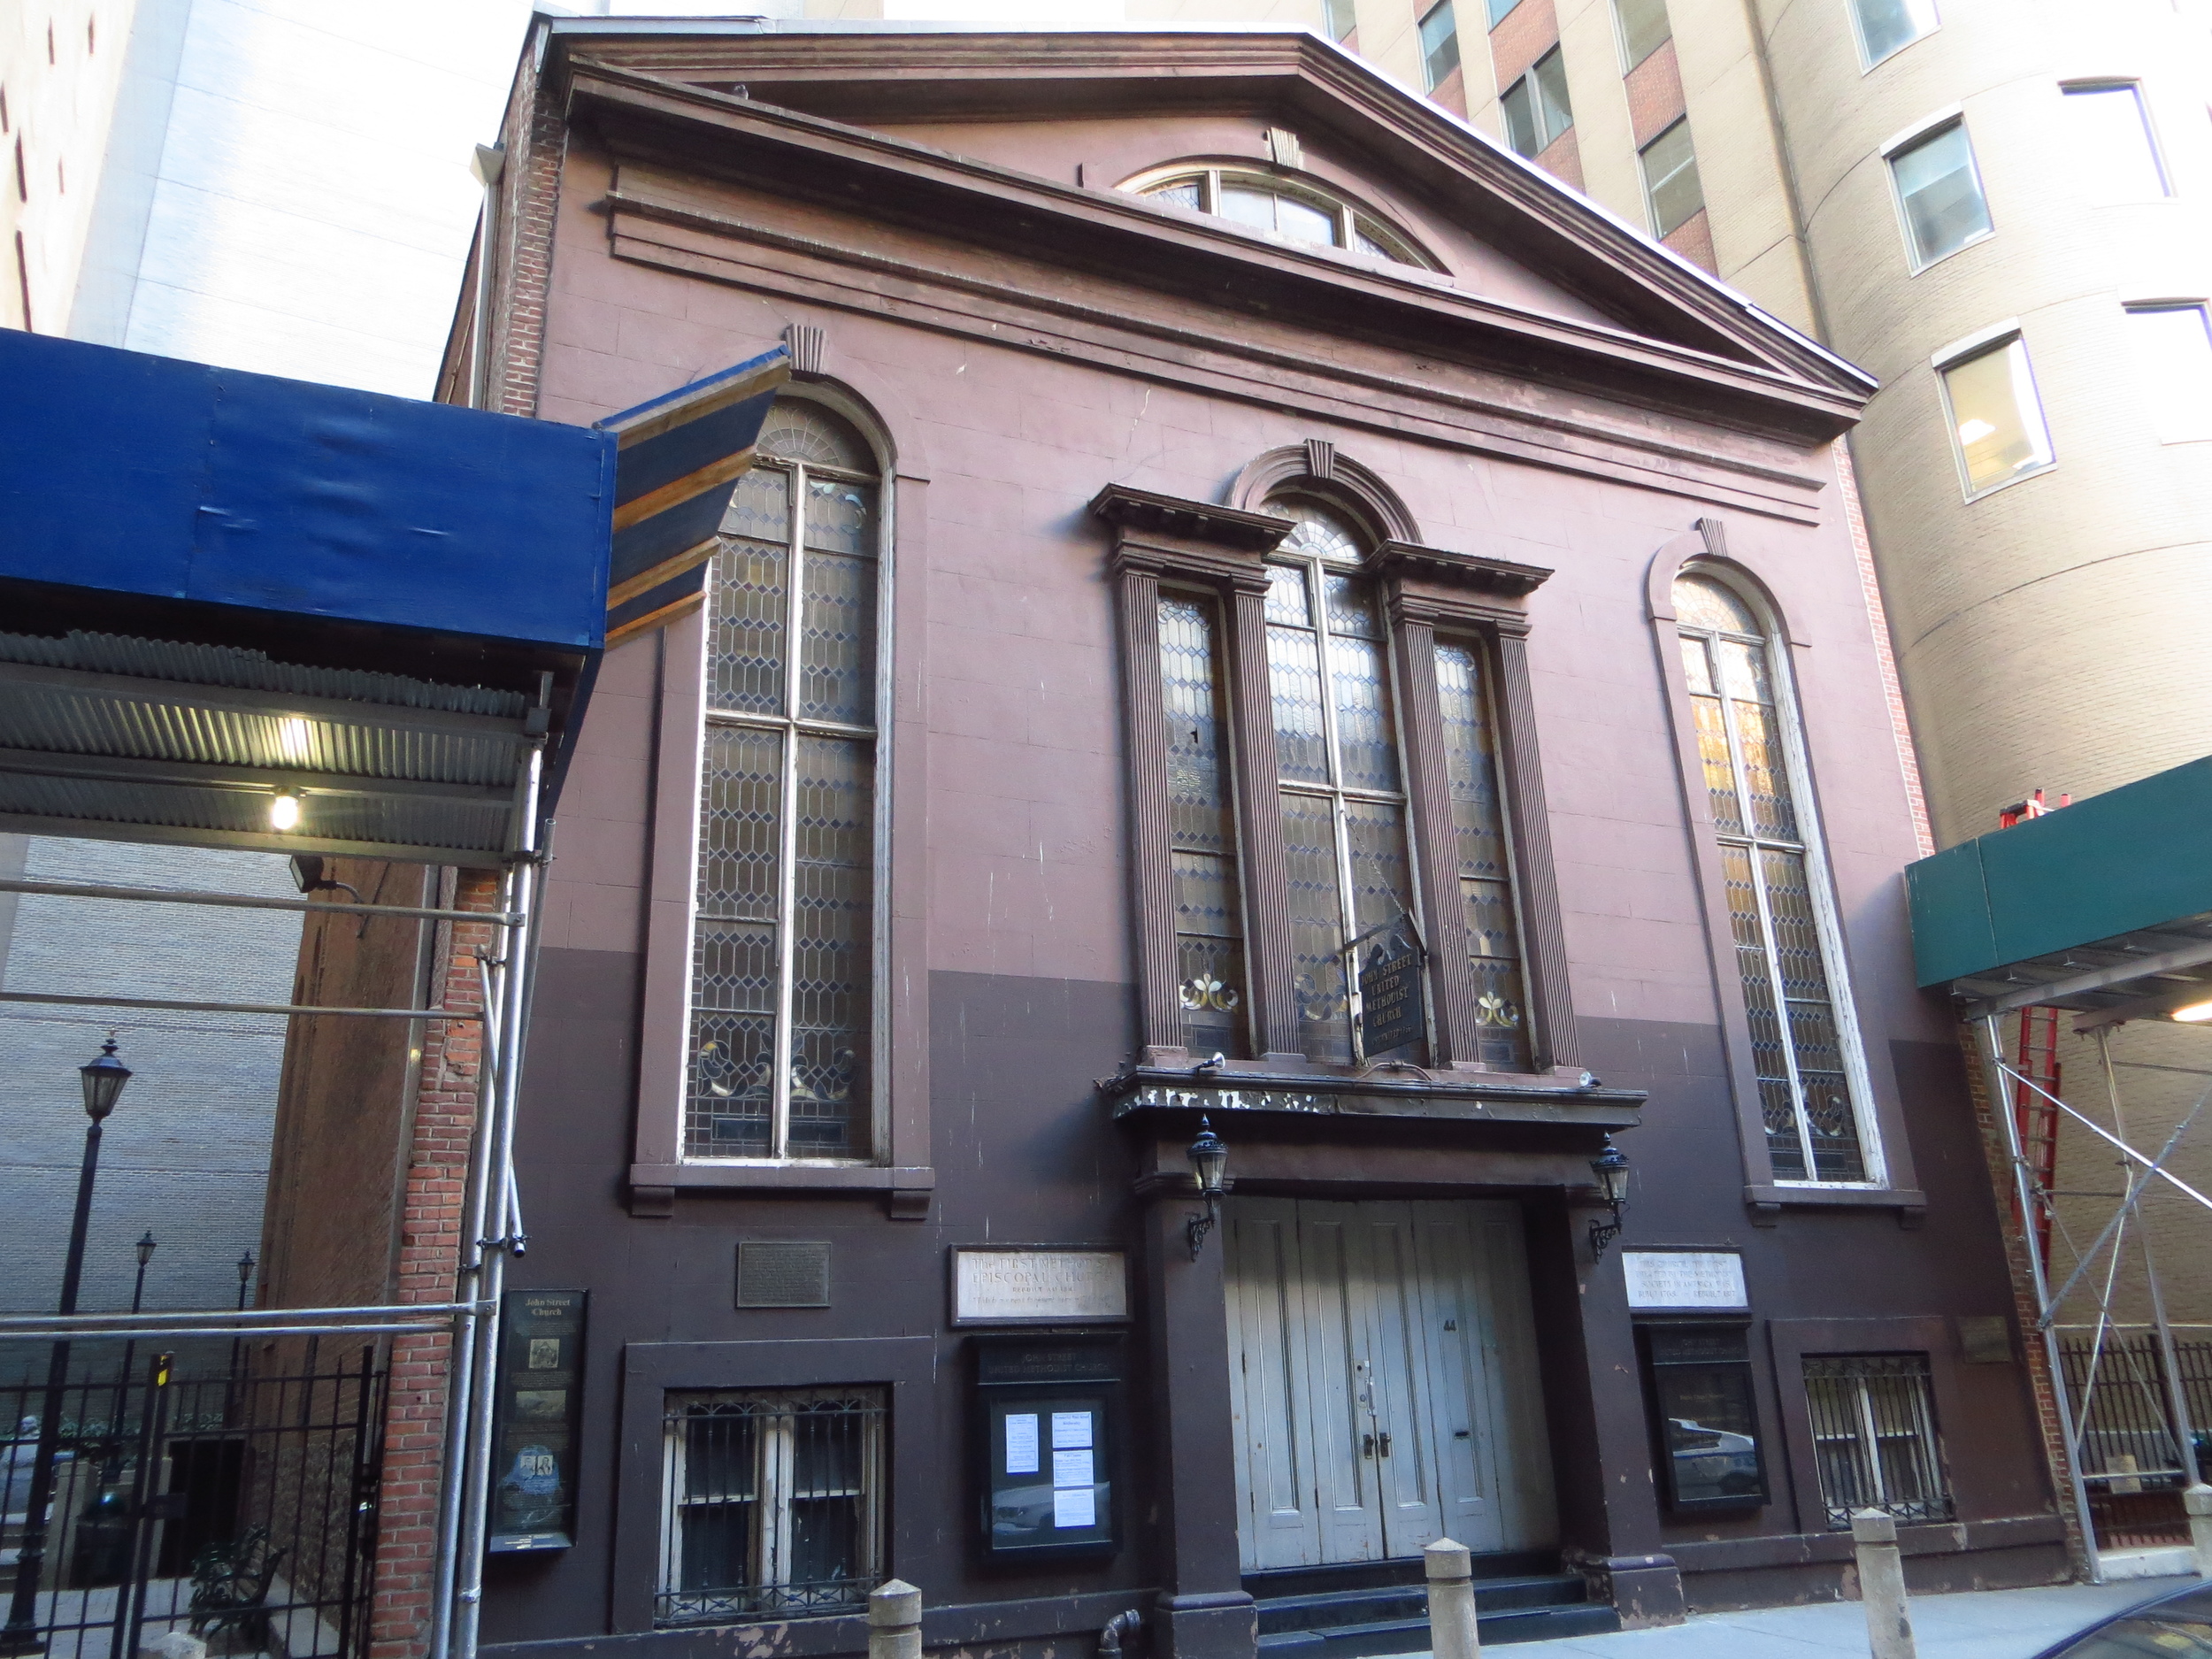 John St. Methodist Church (oldest Methodist Assembly in the US)